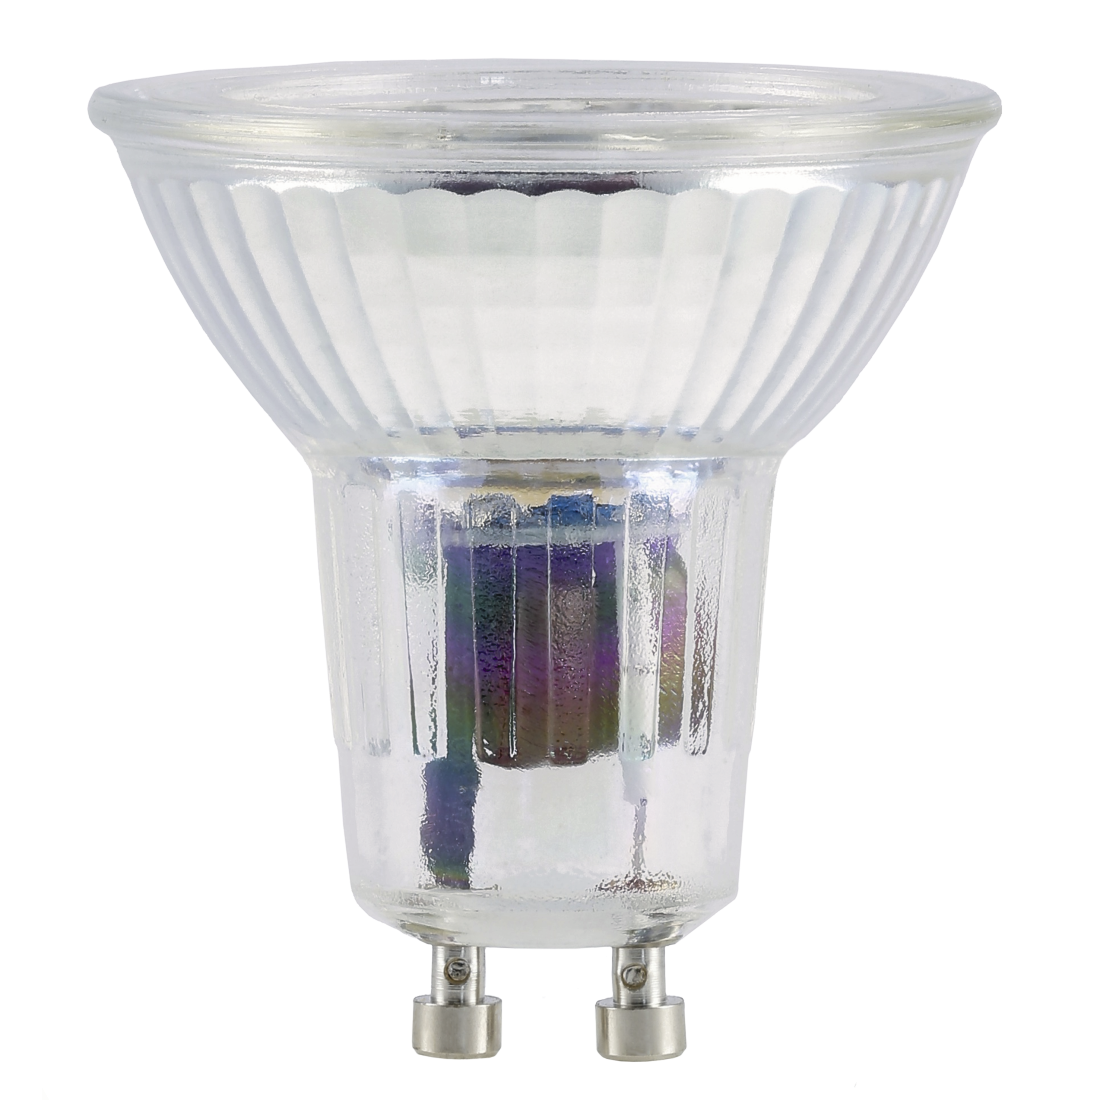 abx High-Res Image - Xavax, LED Bulb, GU10, 445 lm Replaces 60 W, Reflector Lamp PAR16, warm wh., Glass